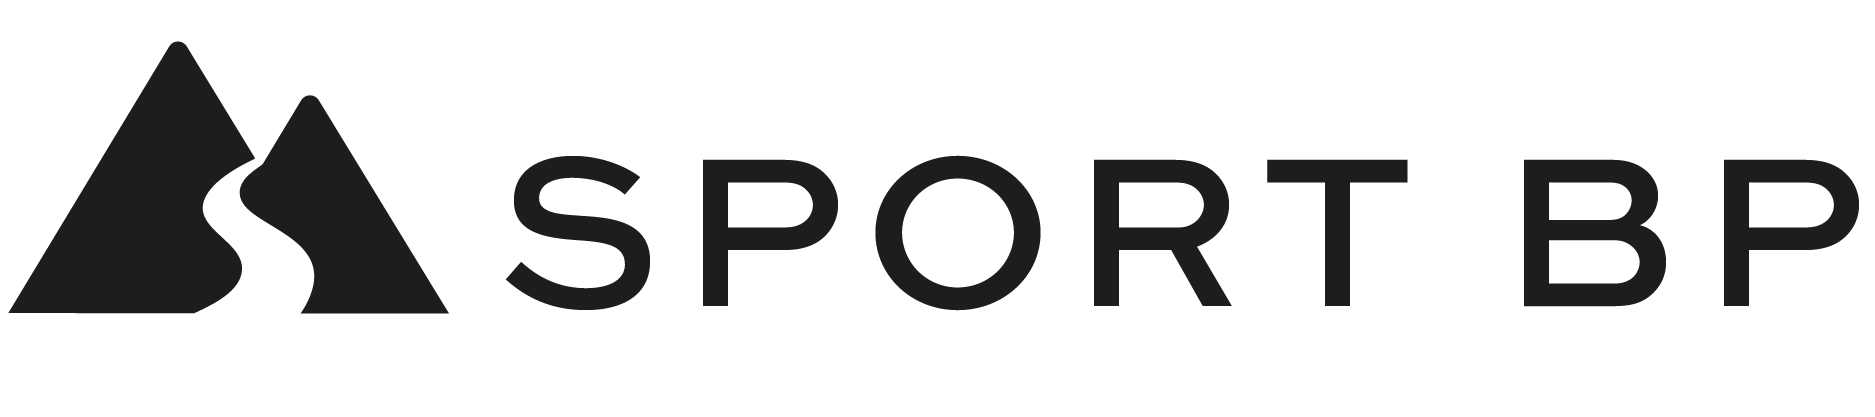 logo.png (20 KB)